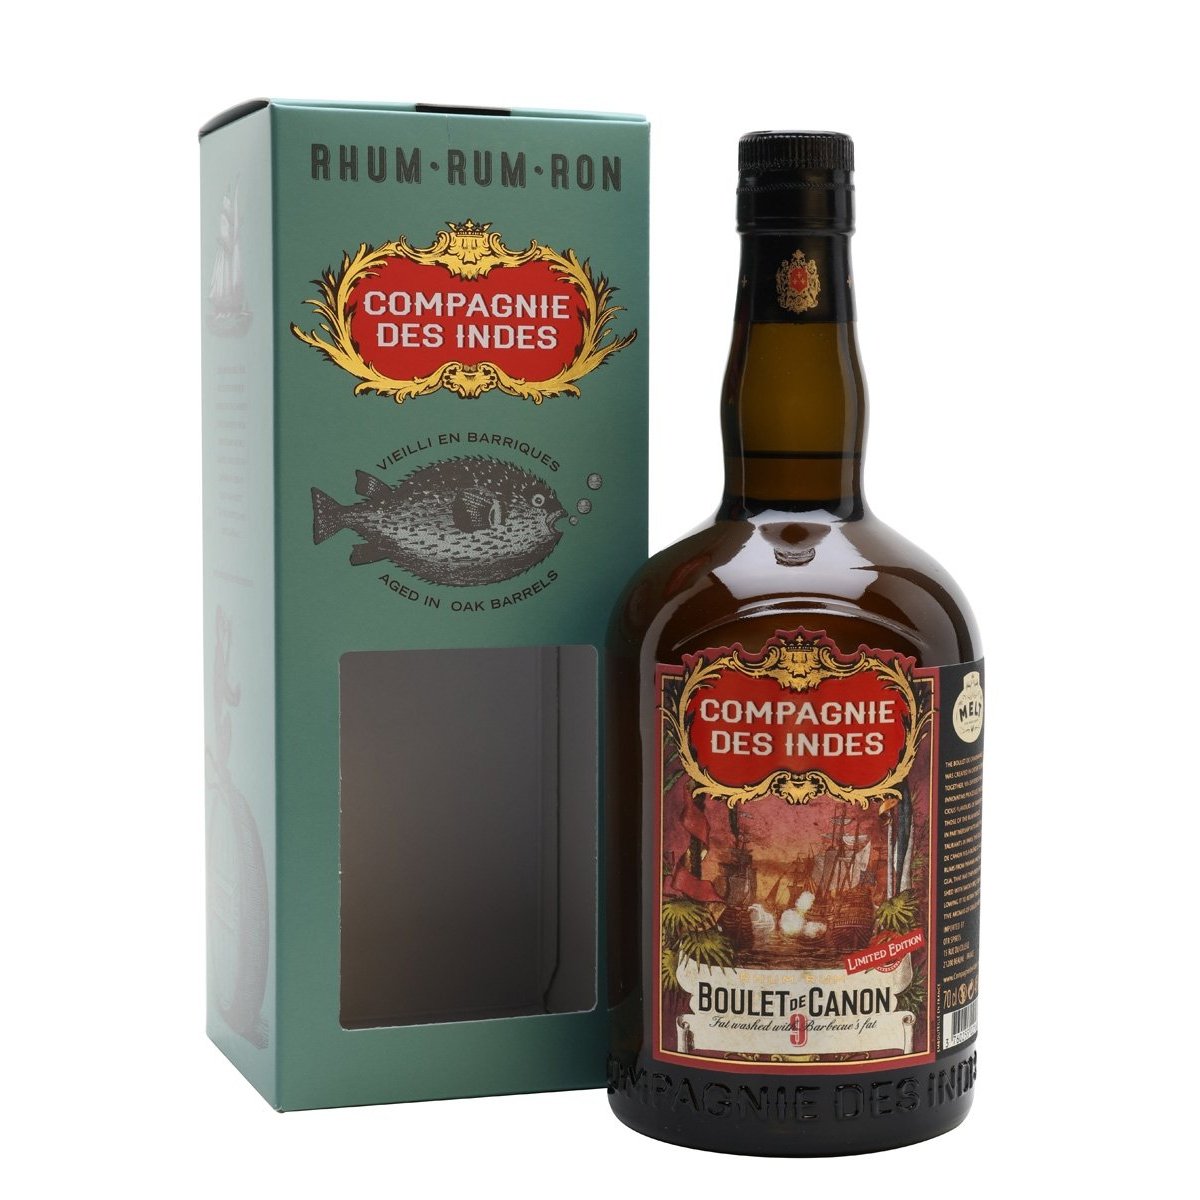 Compagnie des Indes Boulet de Canon Rum Limited Edition No. 9 46% Vol. 0,7l in Giftbox